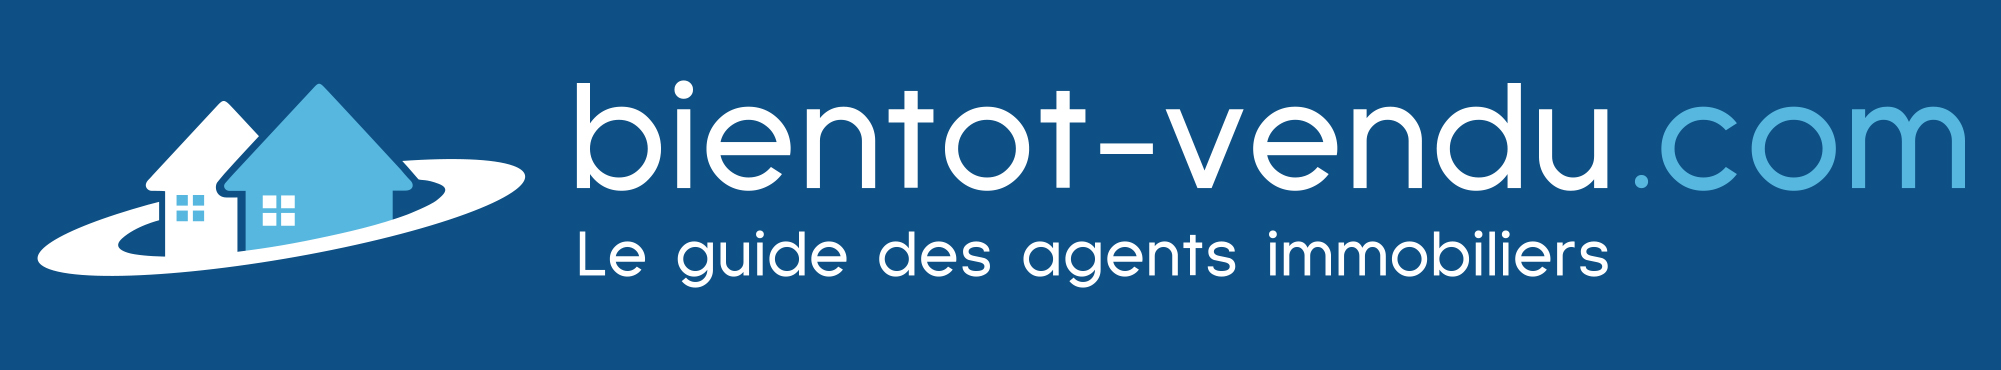 Logo Bientot-vendu